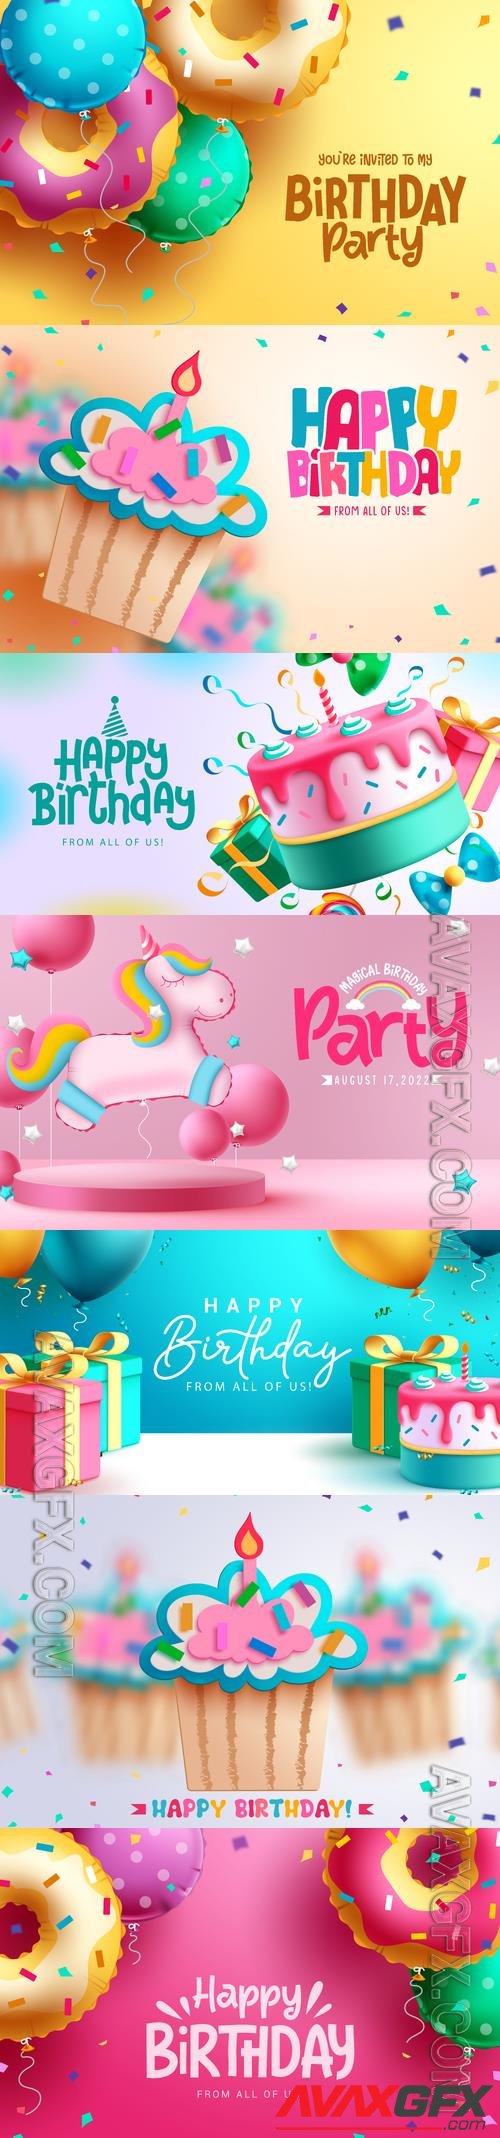 Brthday vector design, happy birthday cut cupcake elements